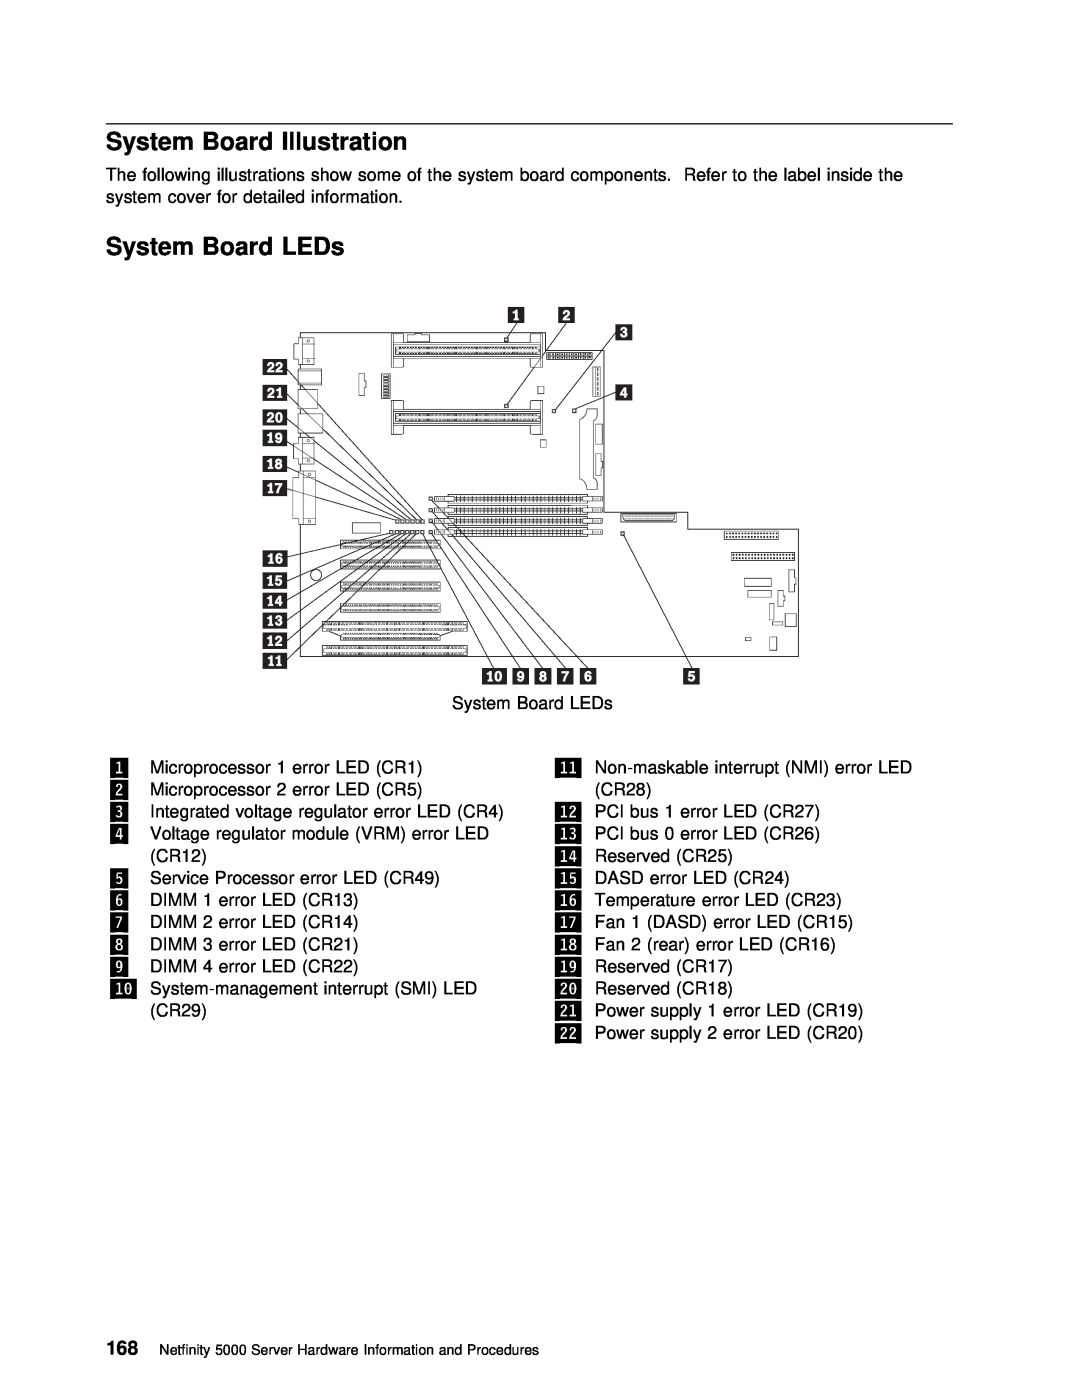 IBM 5000 manual System Board Illustration, System Board LEDs, Dasd 